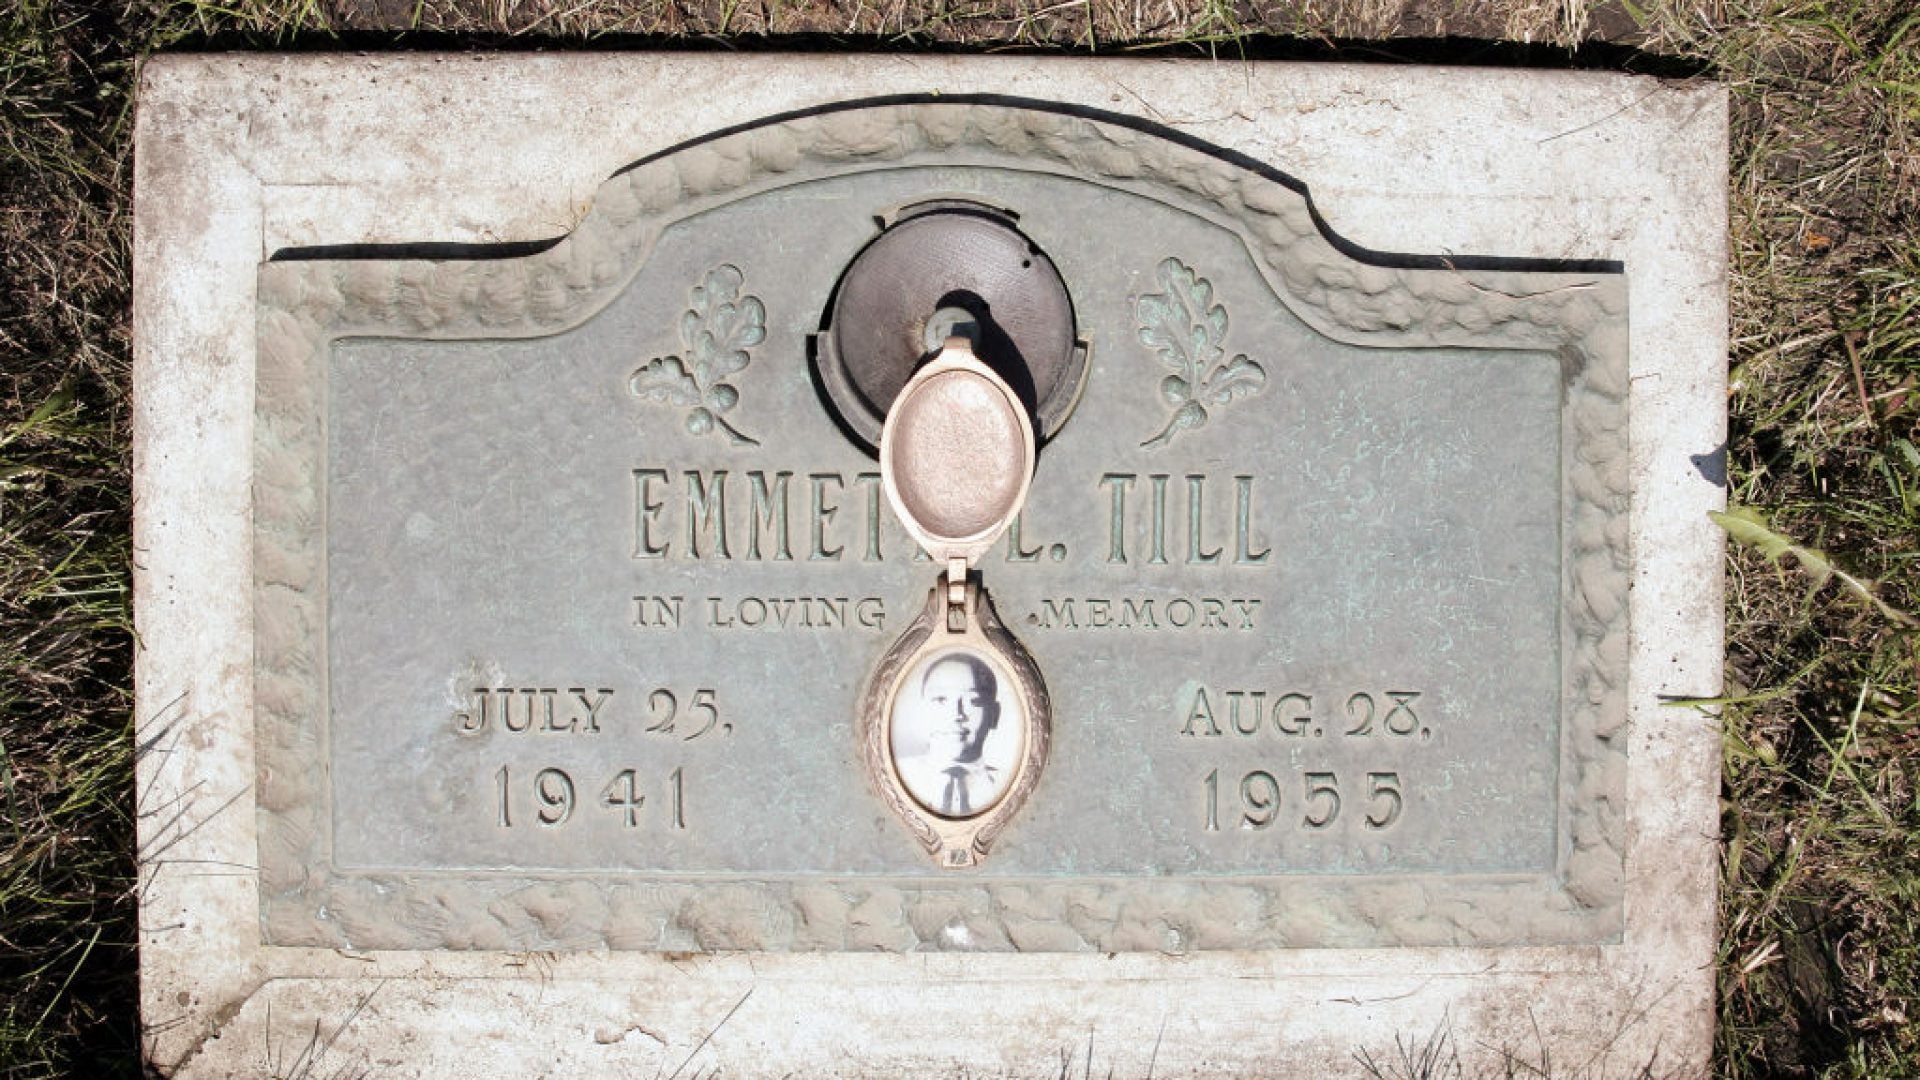 President Biden Designated National Monument Honoring Emmett Till And His Mother Mamie Till-Mobley